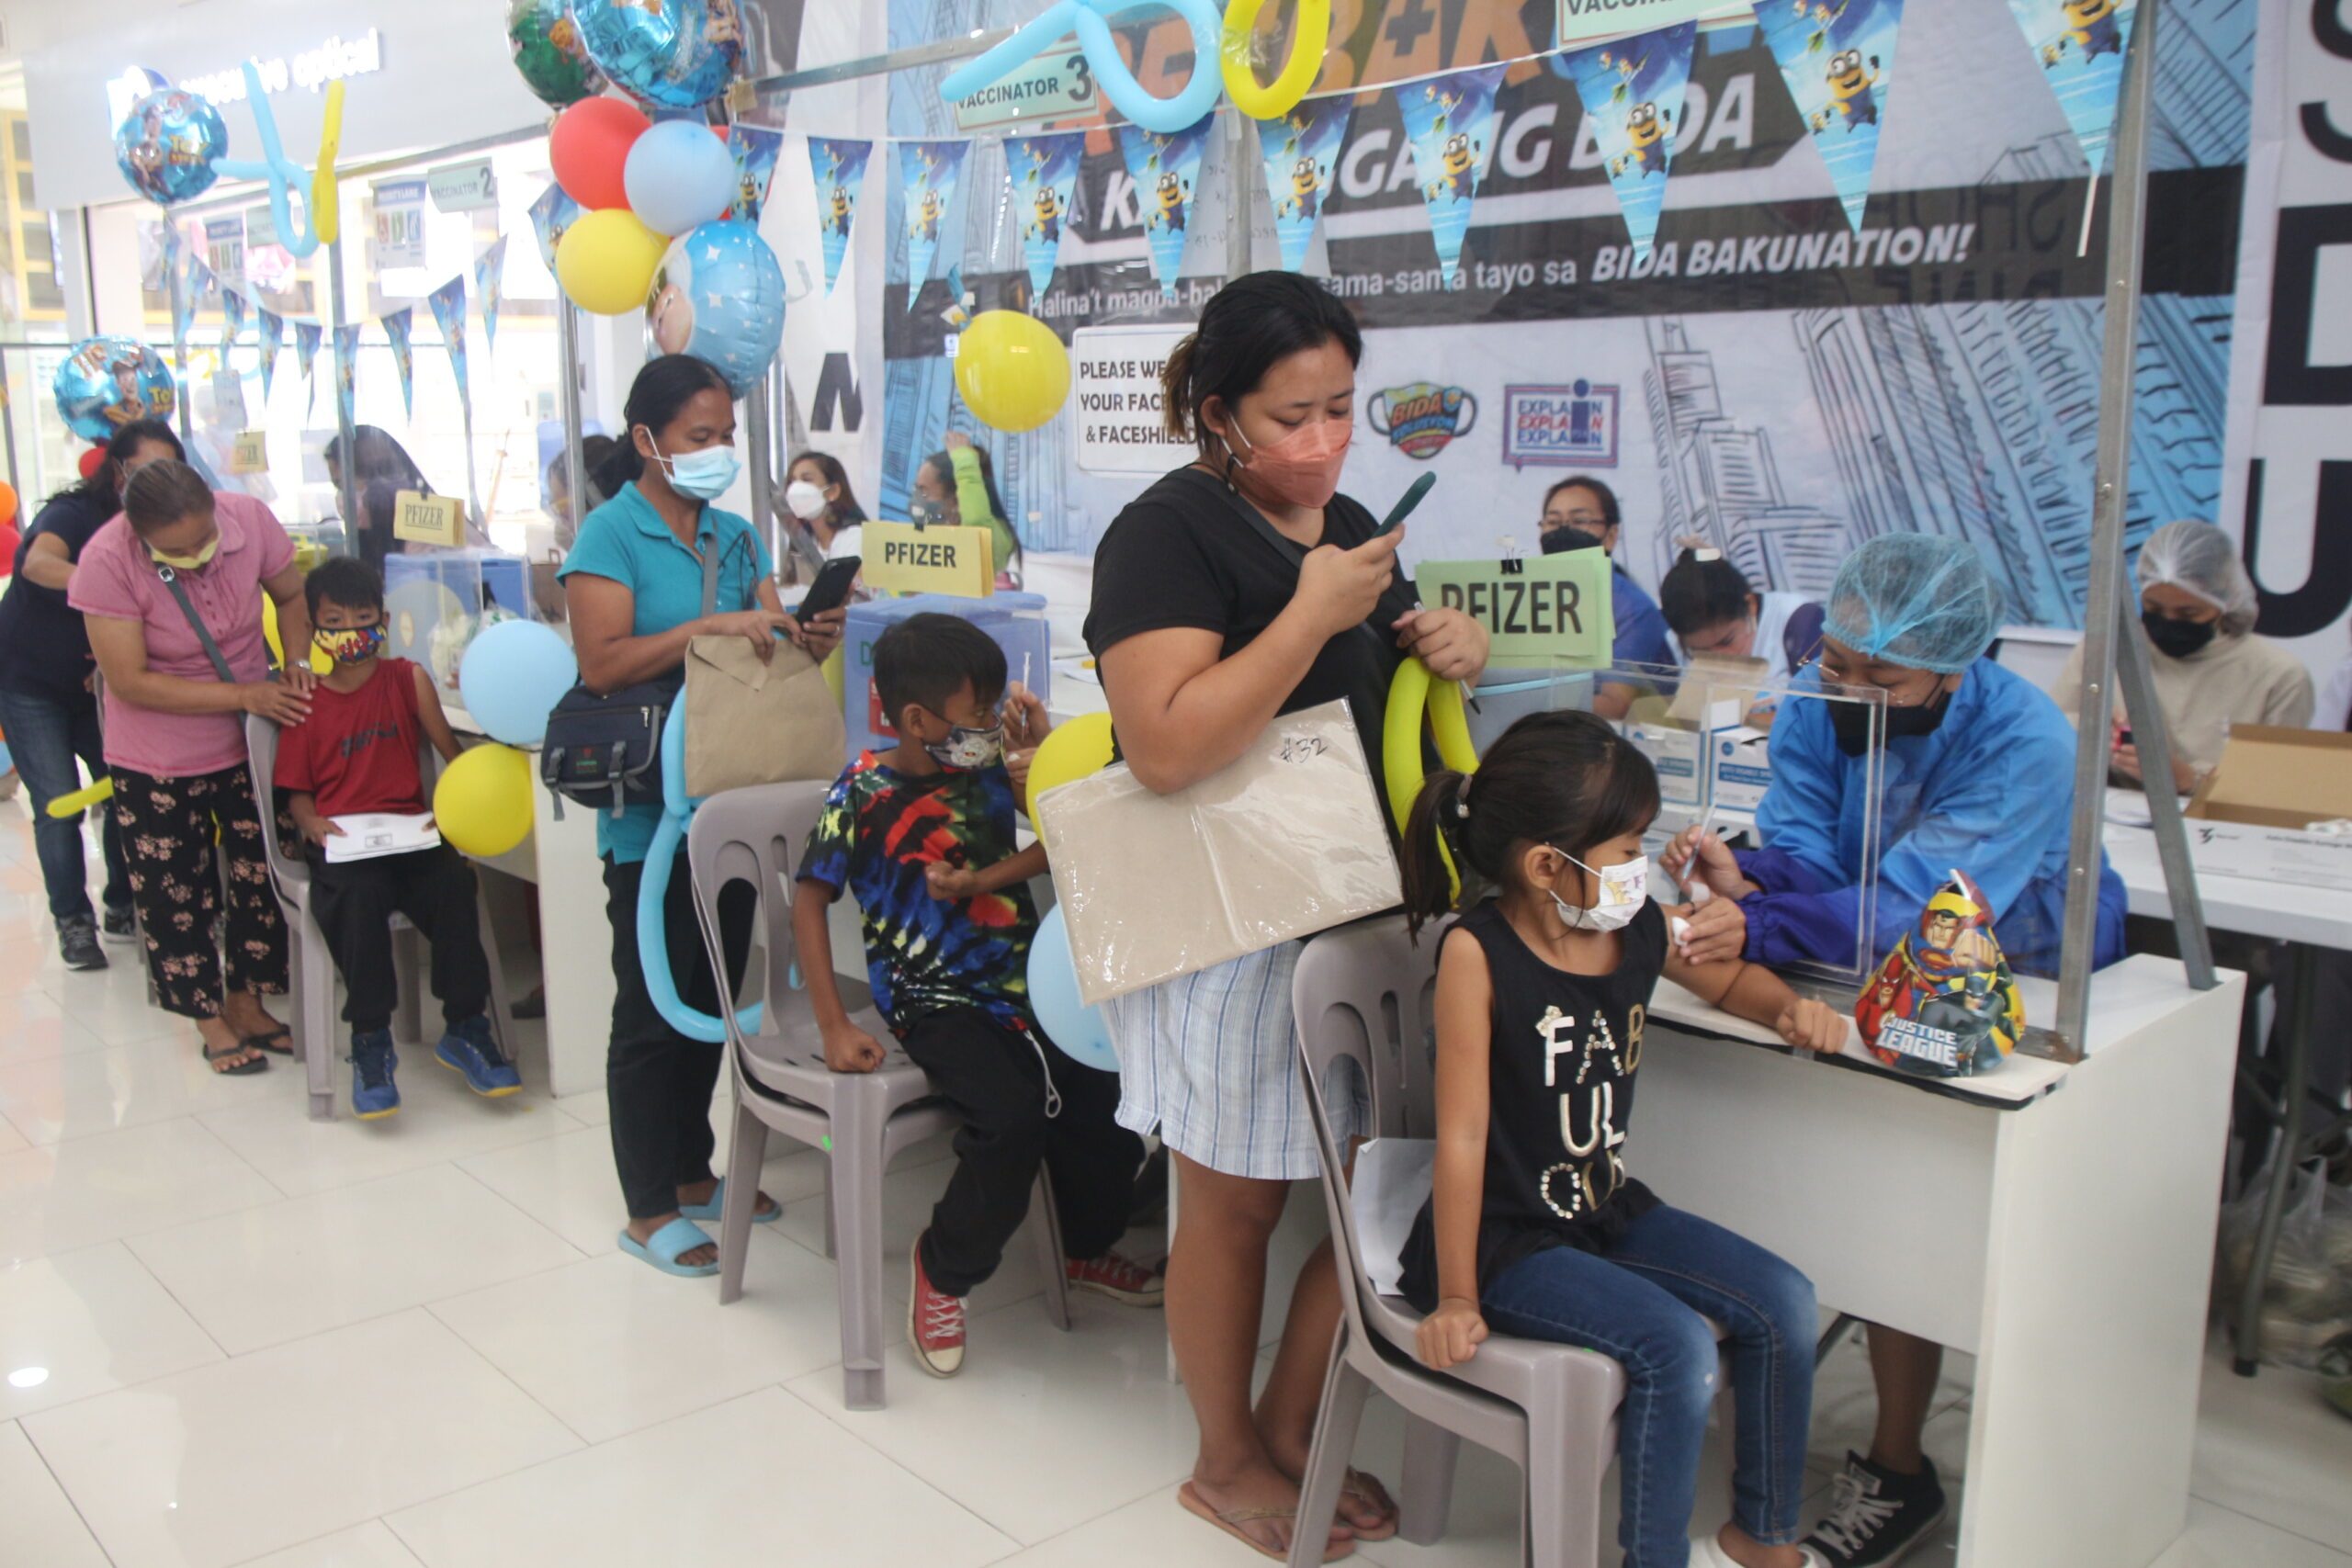 Over 21,000 children ages 5 to 11 get COVID-19 jabs in Ilocos region